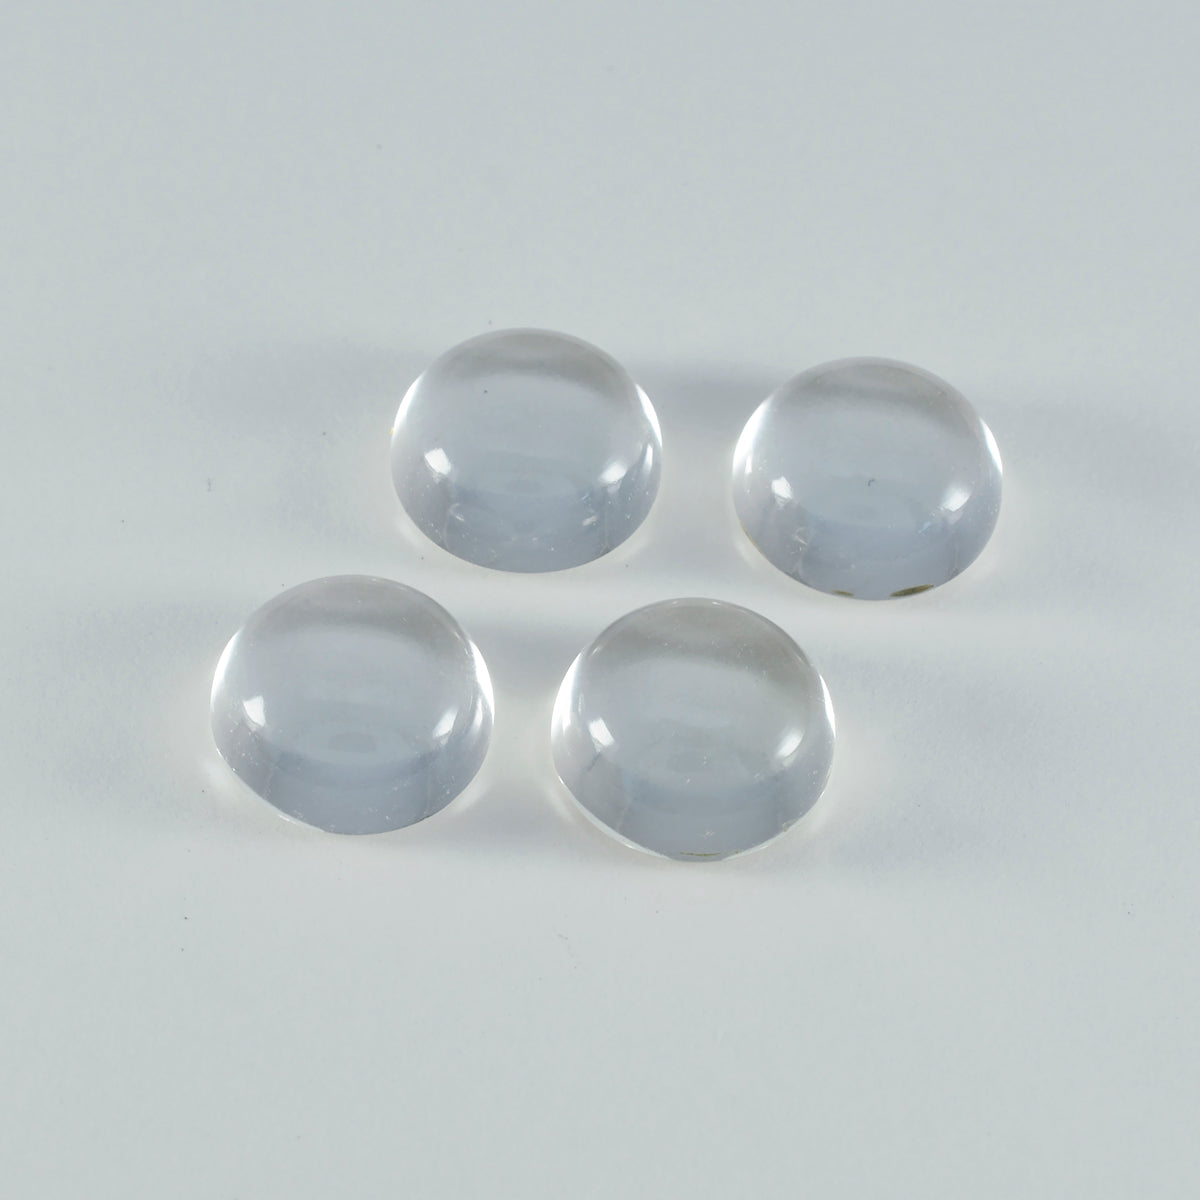 riyogems 1 st vit kristall kvarts cabochon 9x9 mm rund form sten av god kvalitet